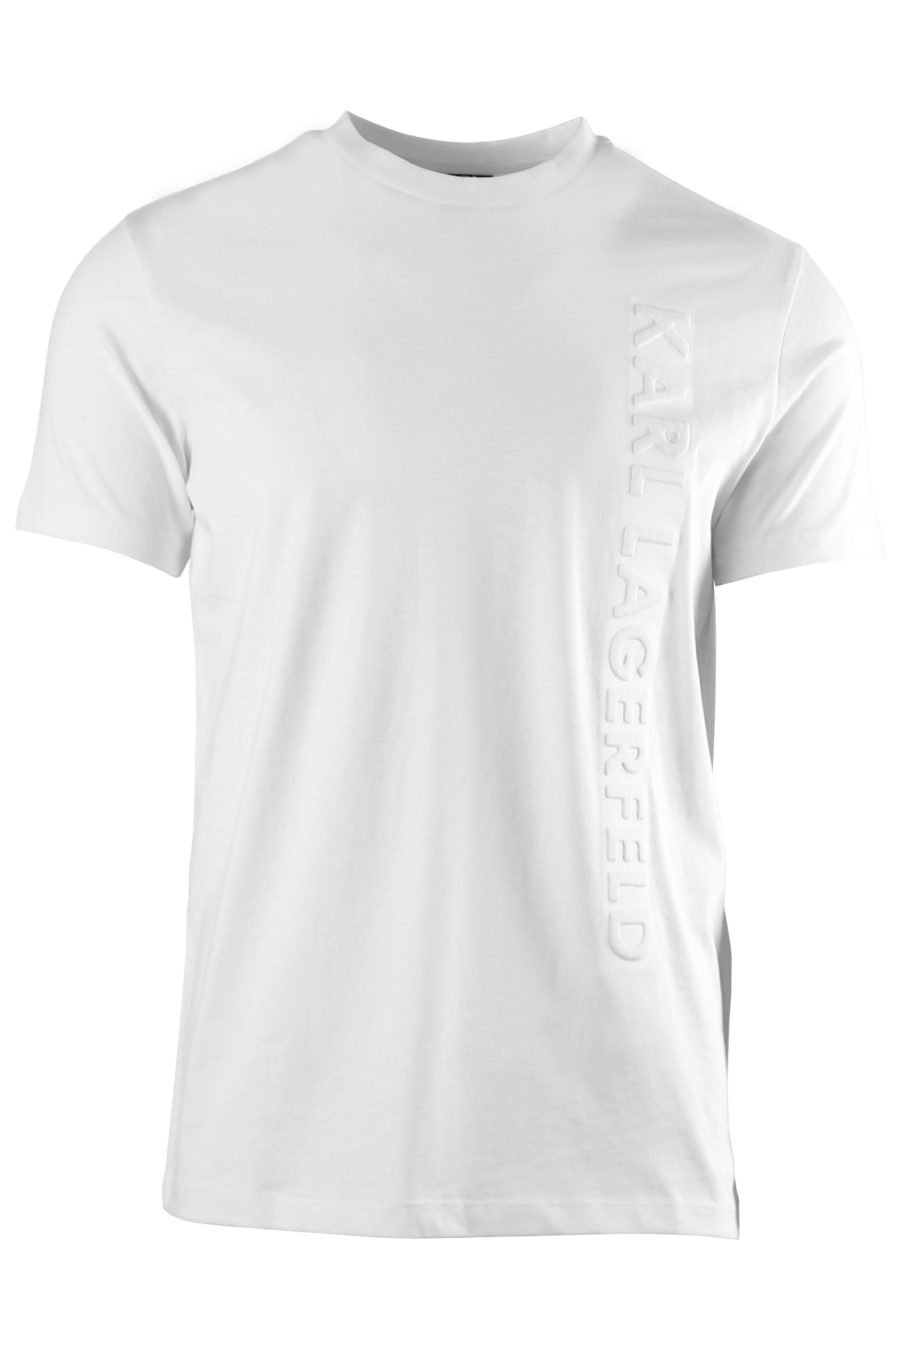 T-shirt branca com logótipo lateral em relevo - IMG 0582 m